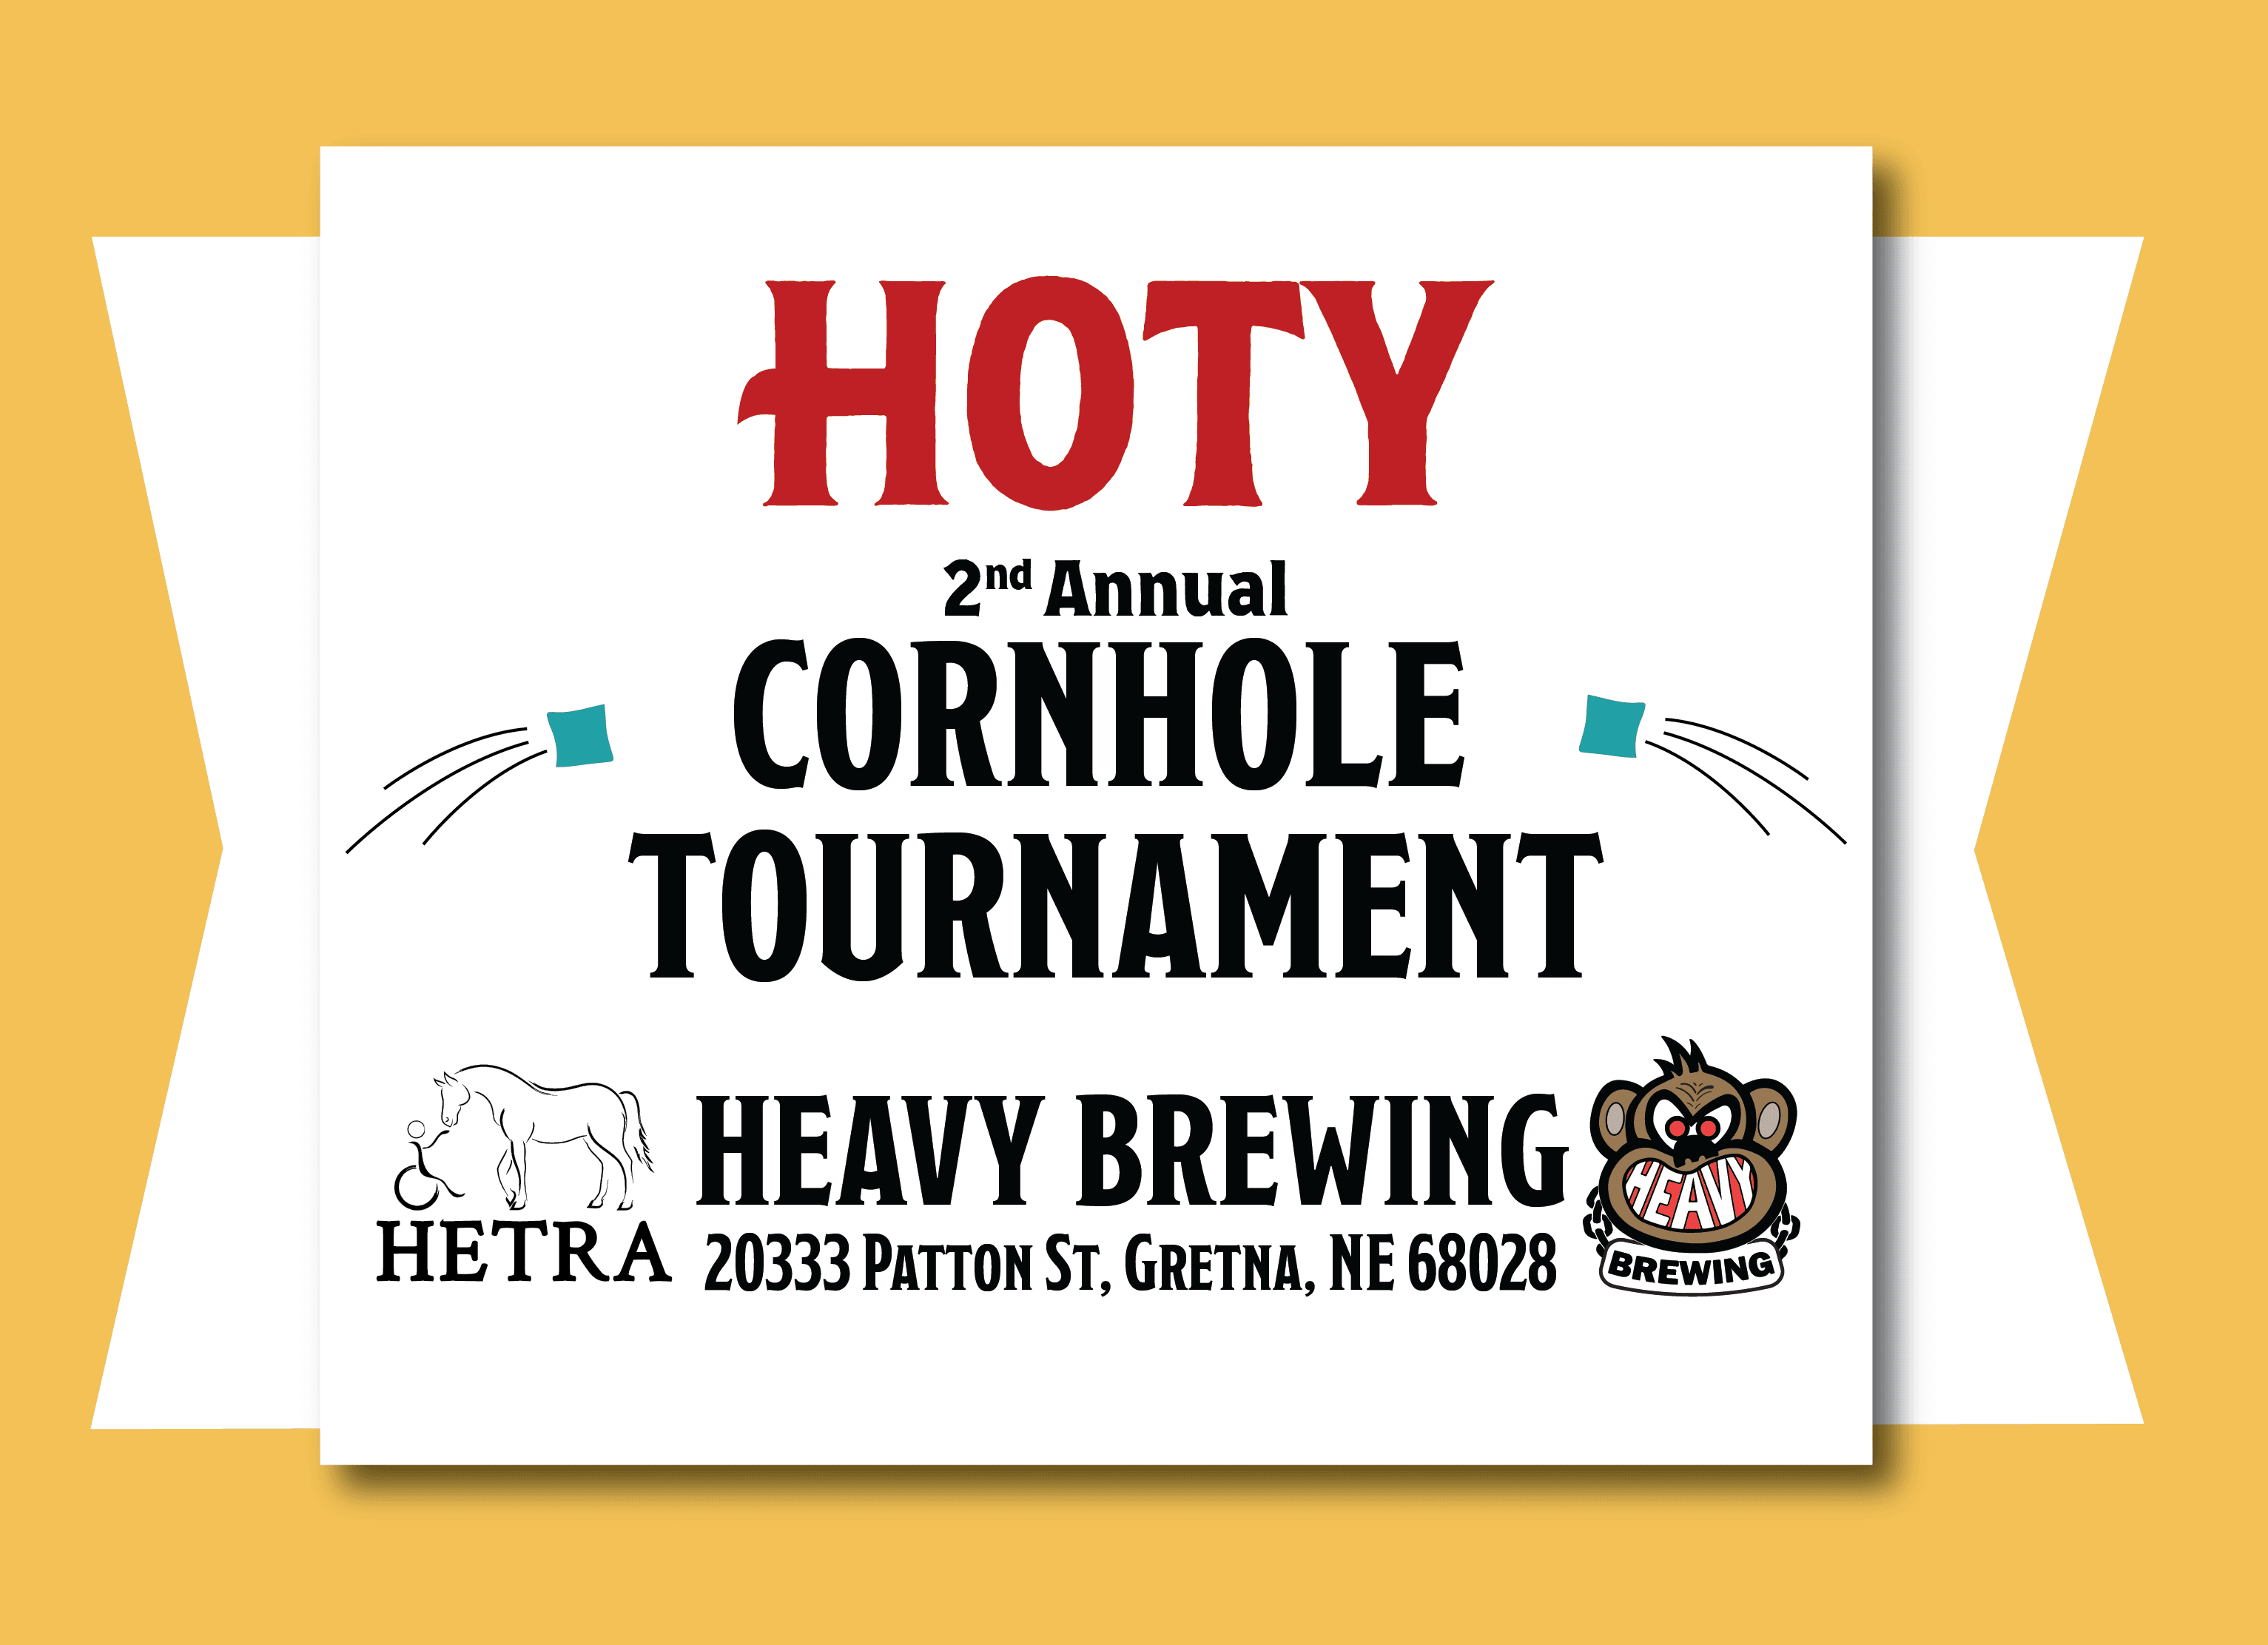 HOTY Cornhole Tournament